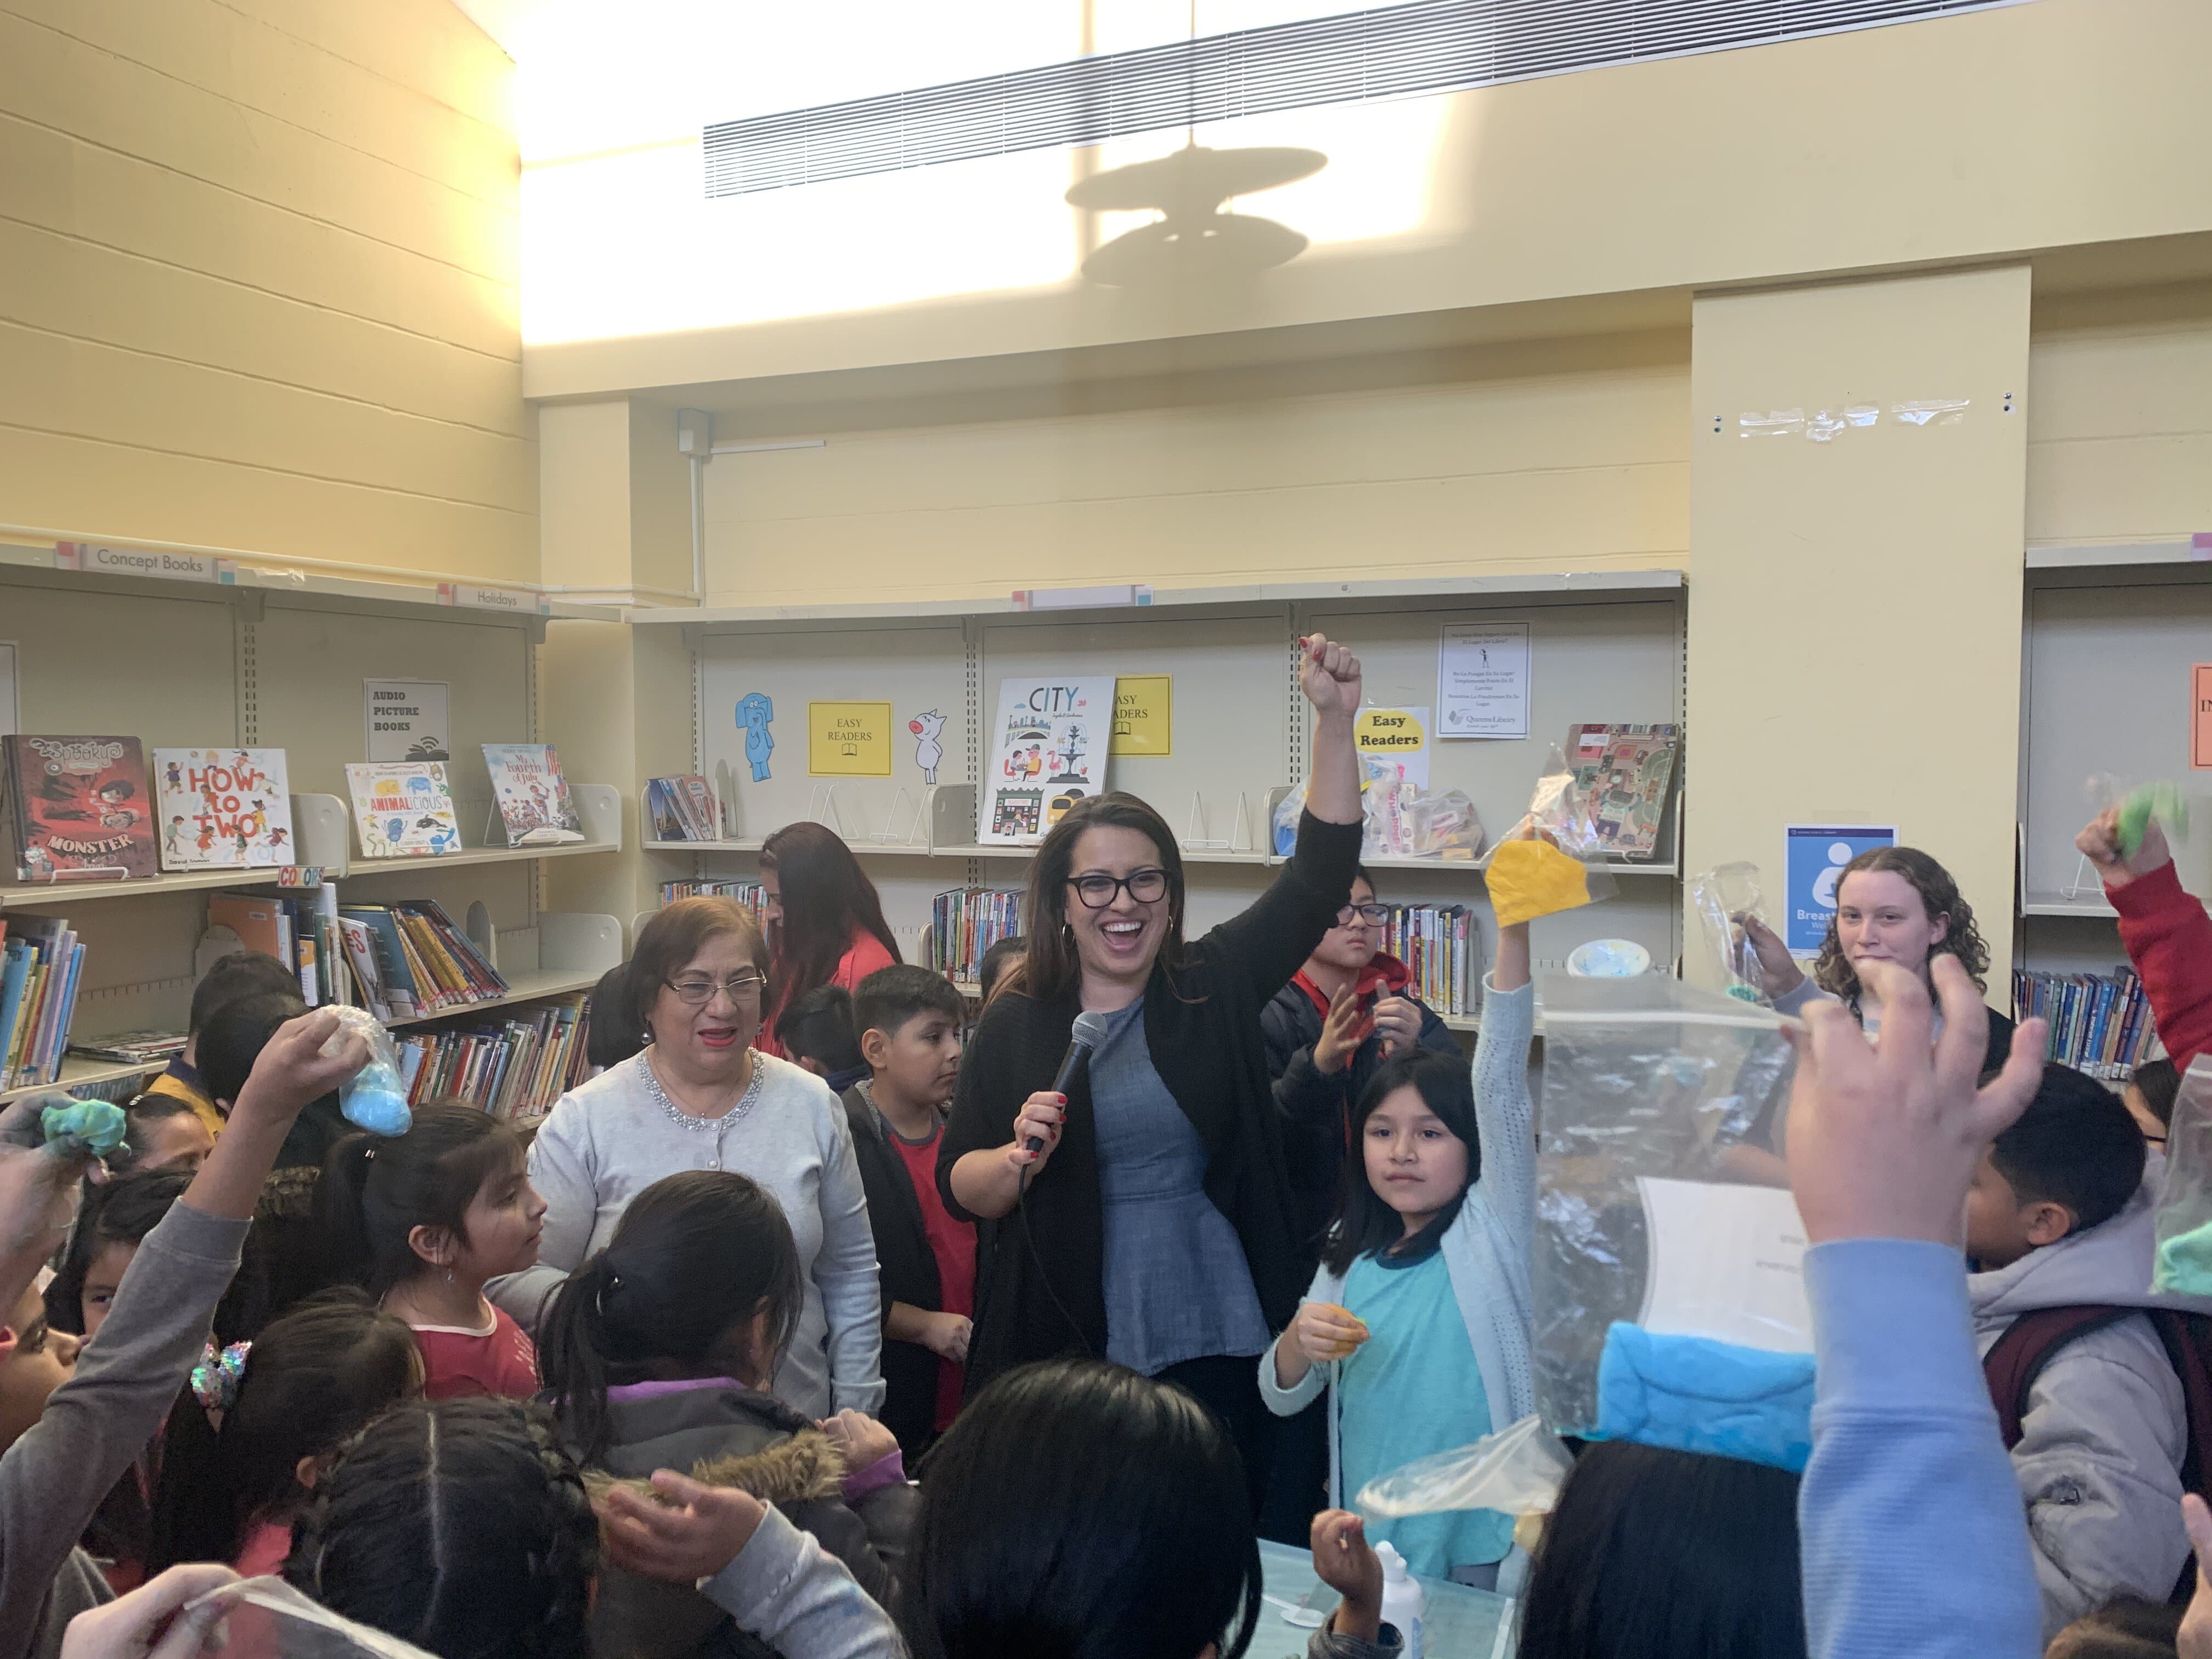 Assemblywoman Cruz joins kids at Corona Library to make slime.